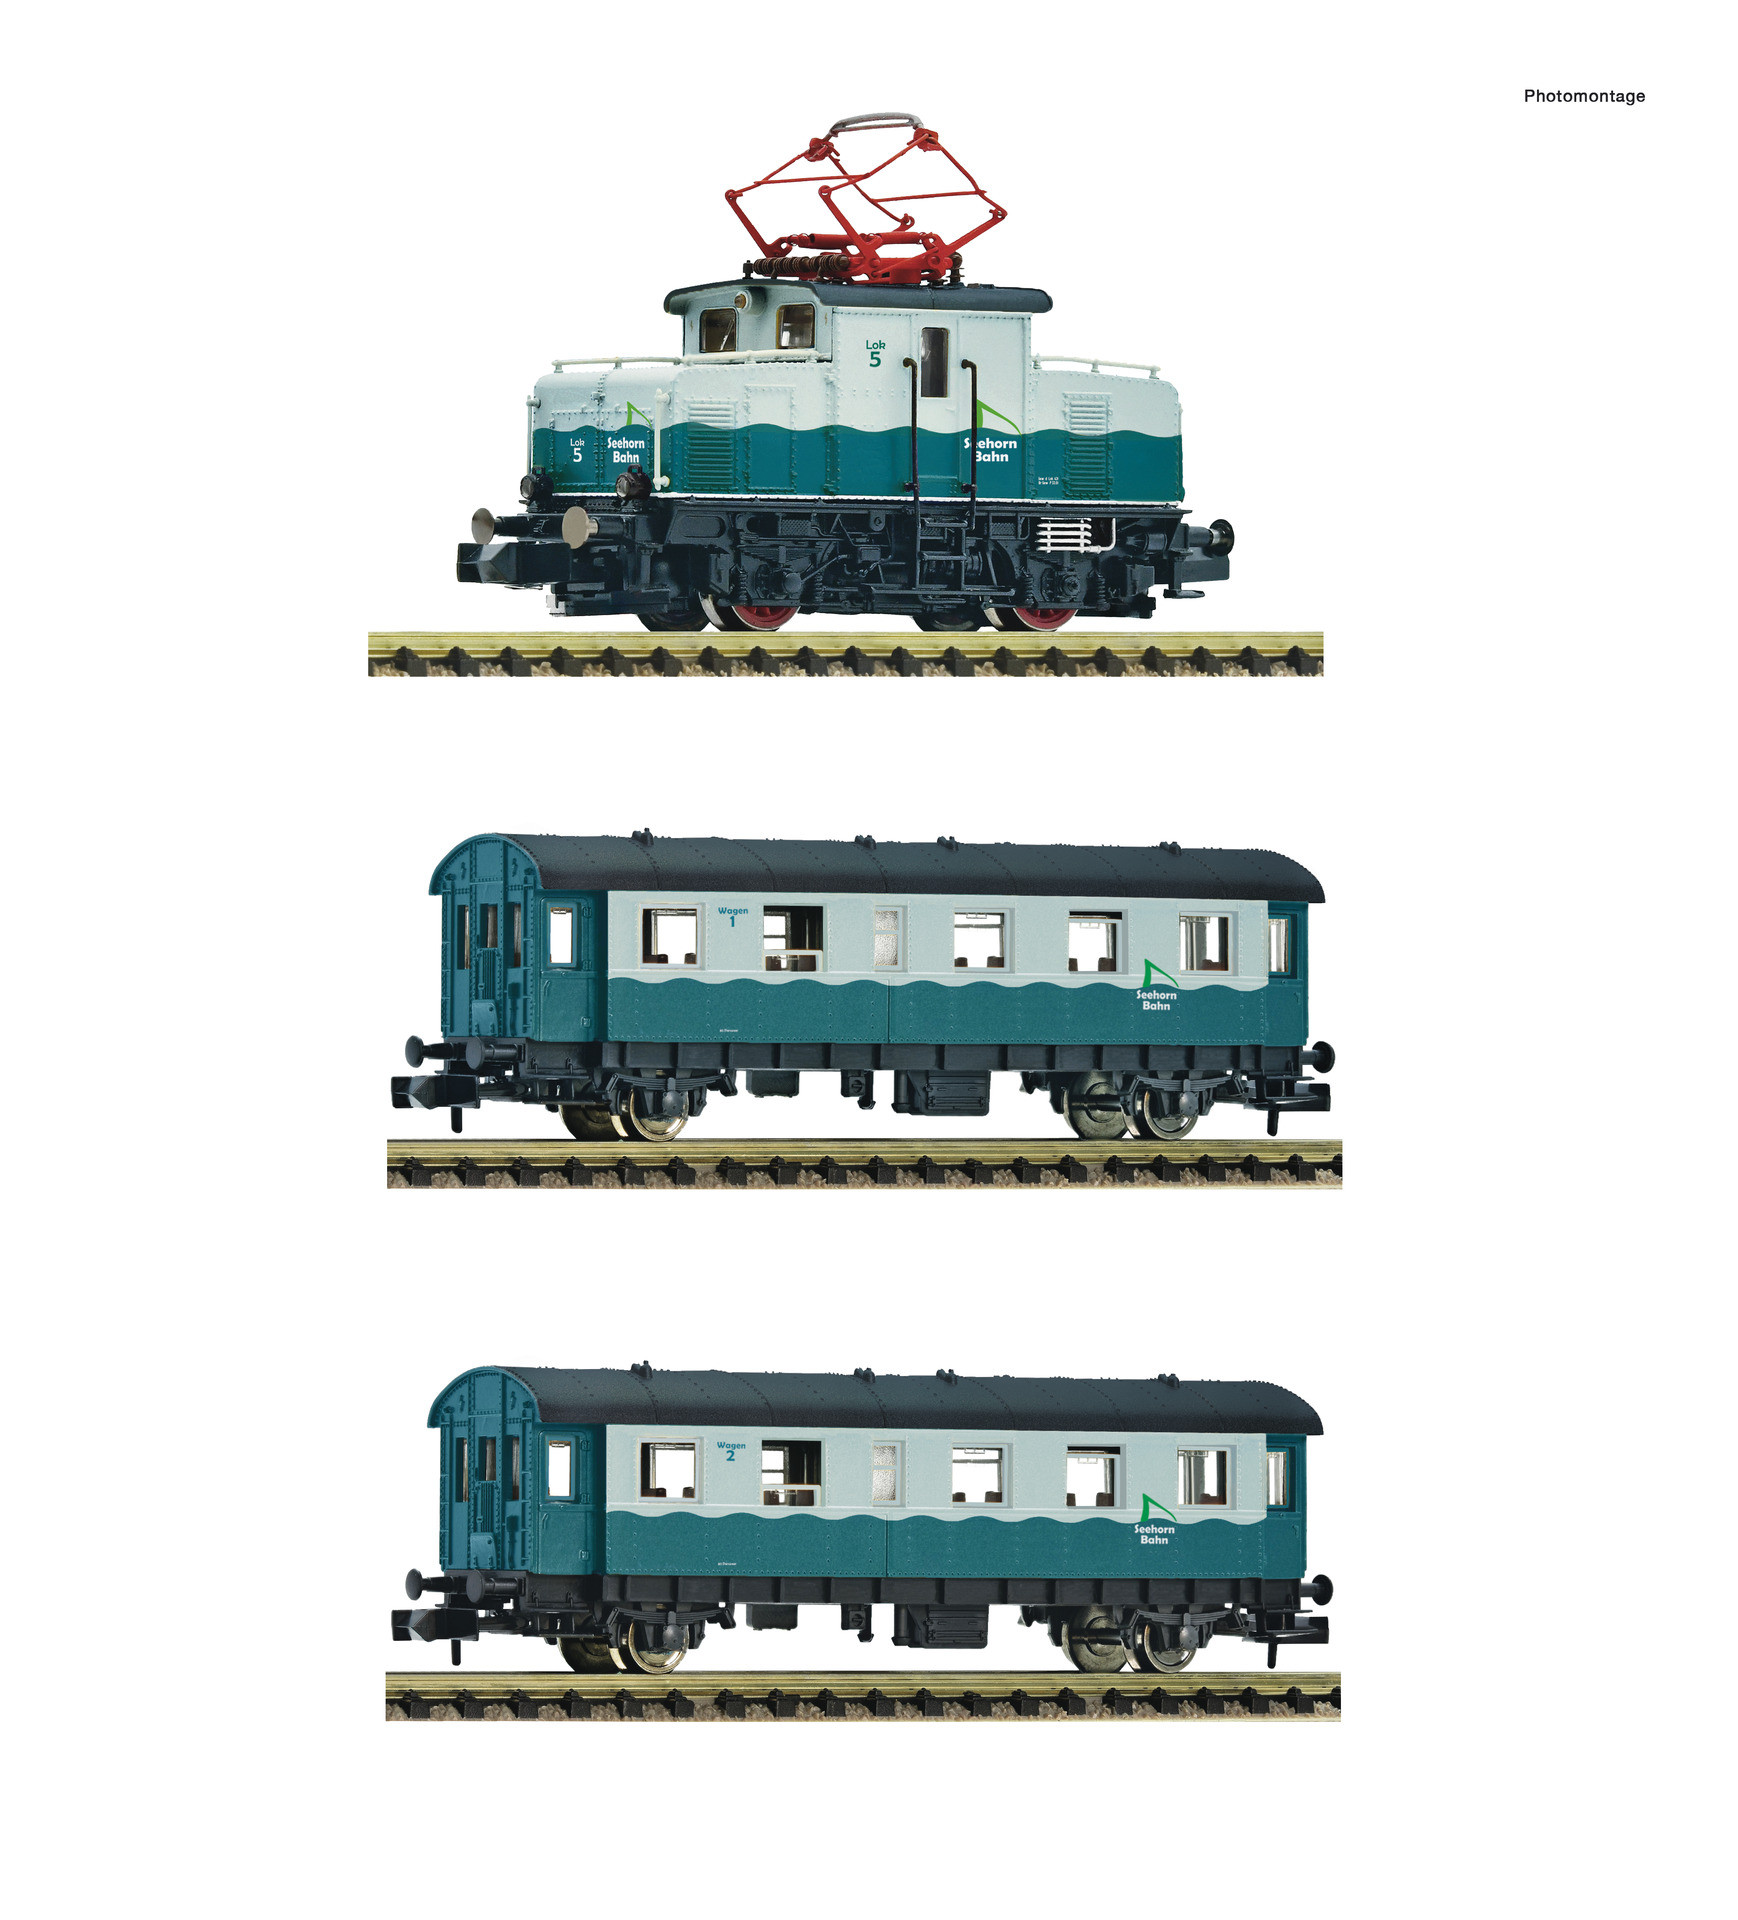 *Seehorn Bahn Rack & Pinion Electric Train Pack III